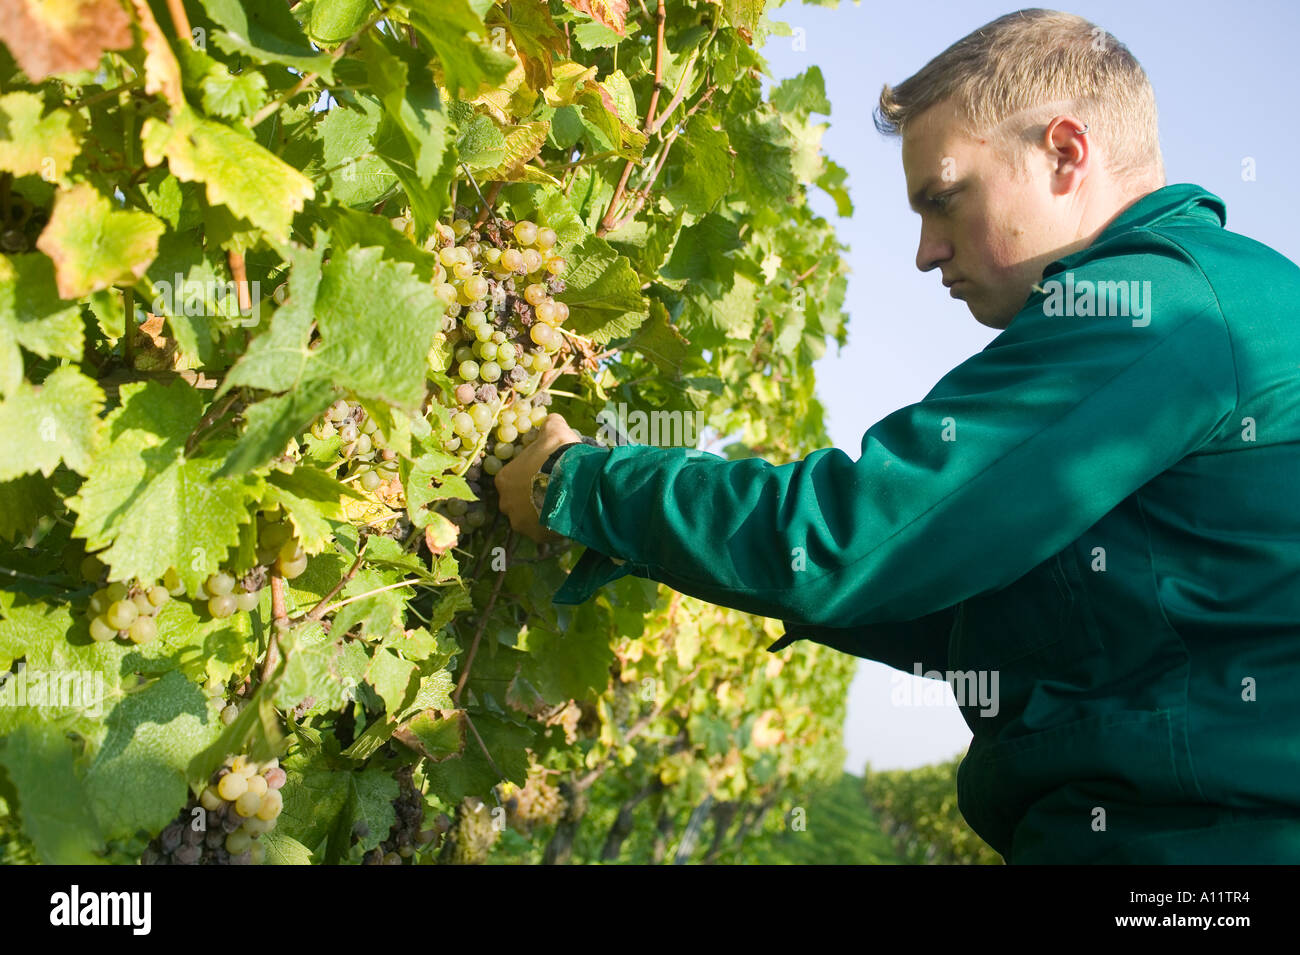 Landarbeiter bei der weinlese im Wingert worker gathering grapes at vineyard Stock Photo